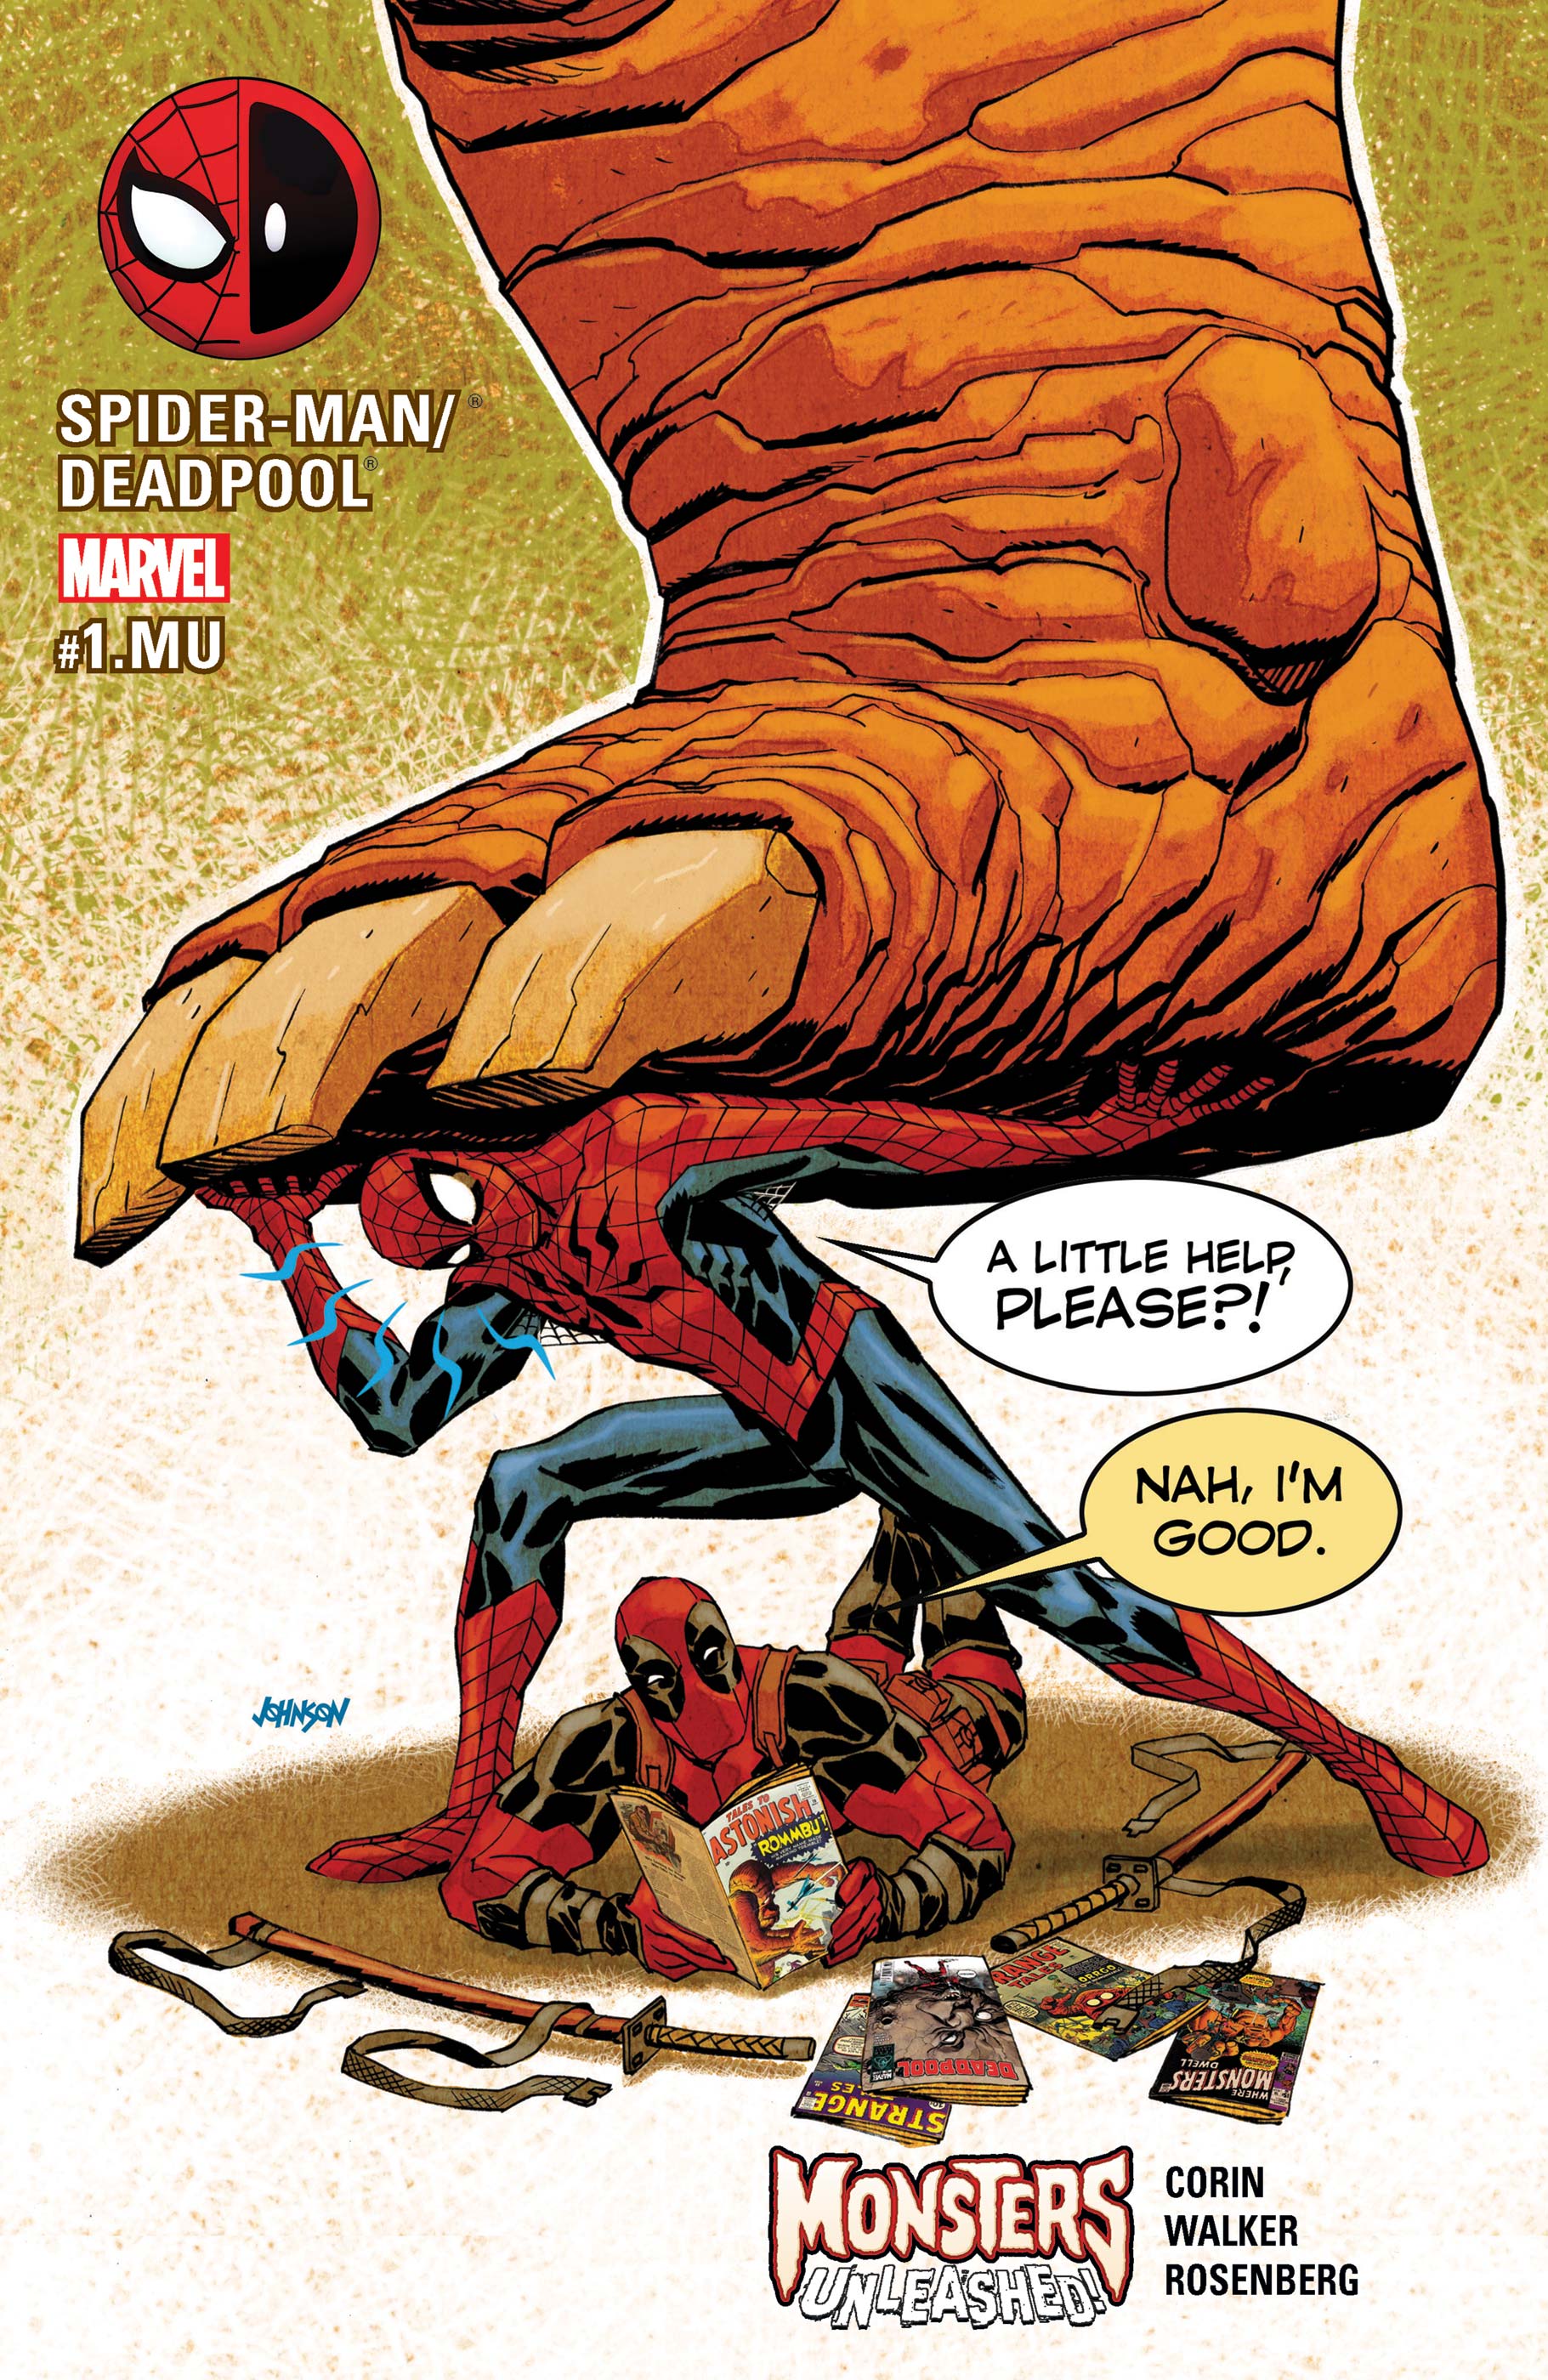 Spider man deadpool vol 1